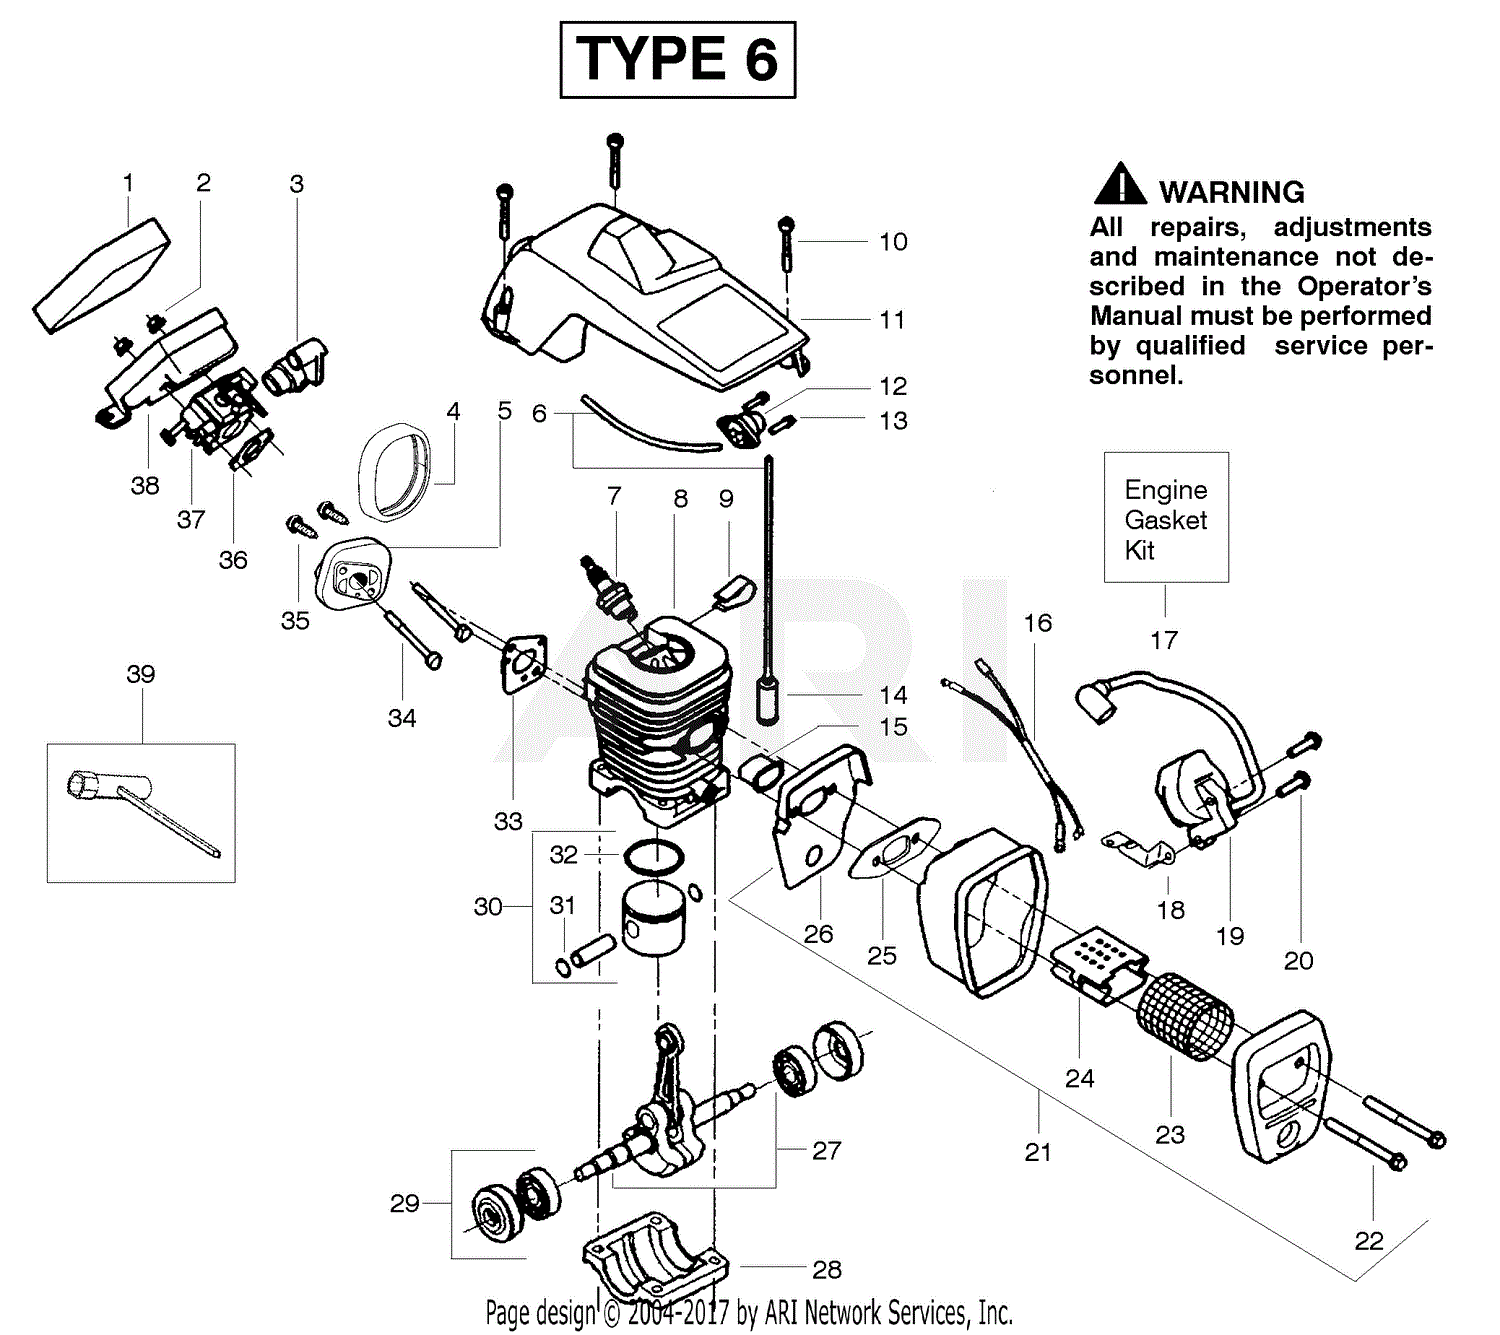 Poulan 2150 PR Gas Chain Saw Parts Diagram for Engine Type 6 cub cadet wiring schematic 